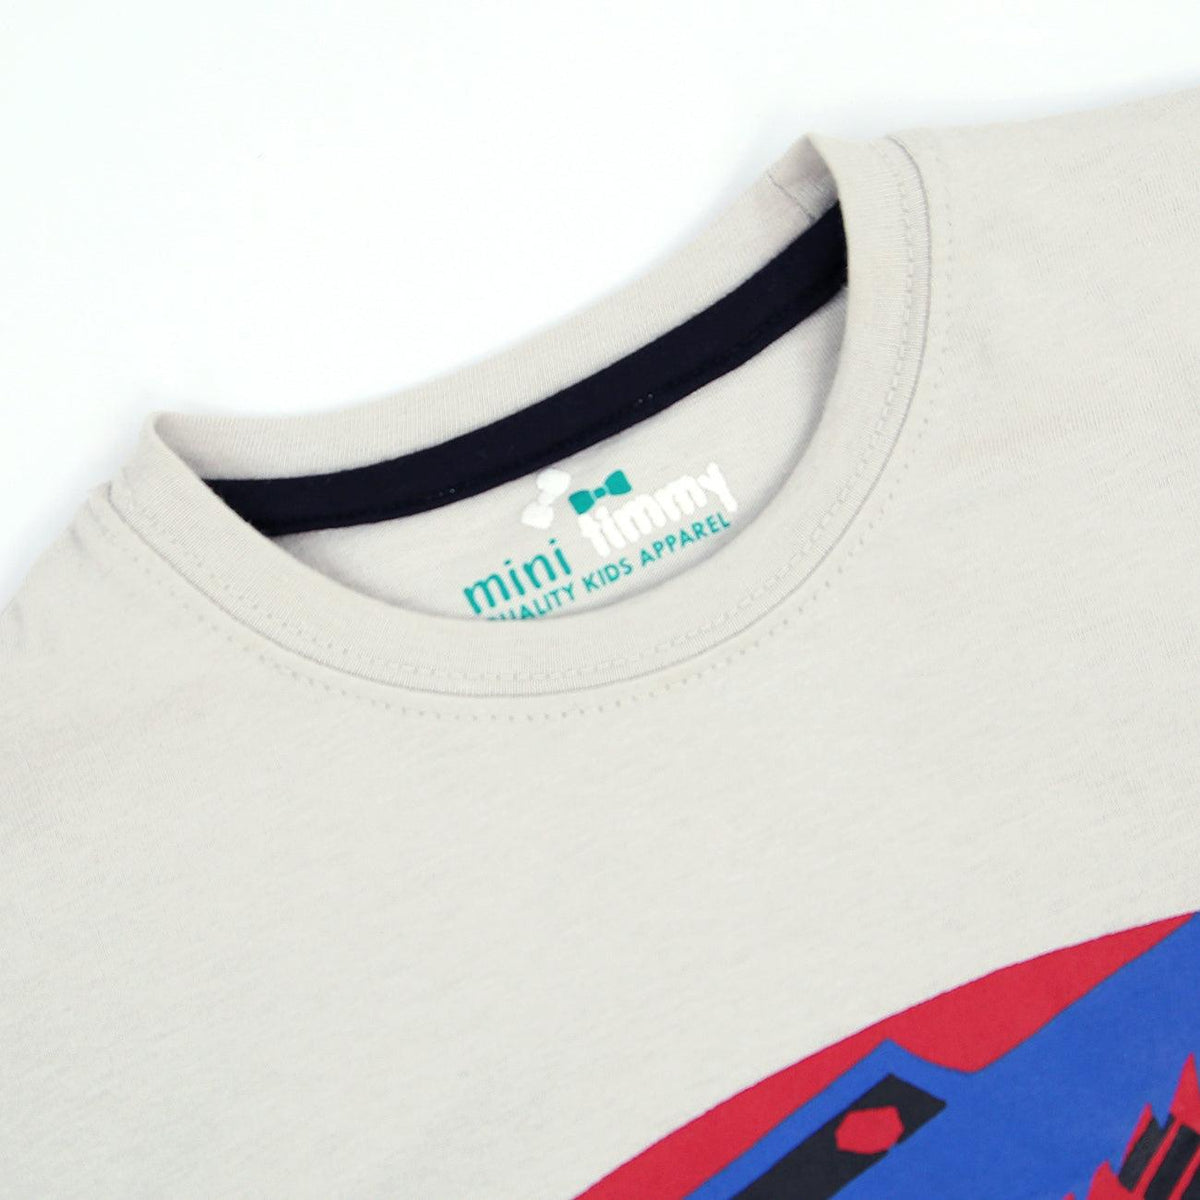 Boys Soft Cotton &quot;Race Way&quot; Printed T-Shirt 9 MONTH - 10 YRS - Brands River